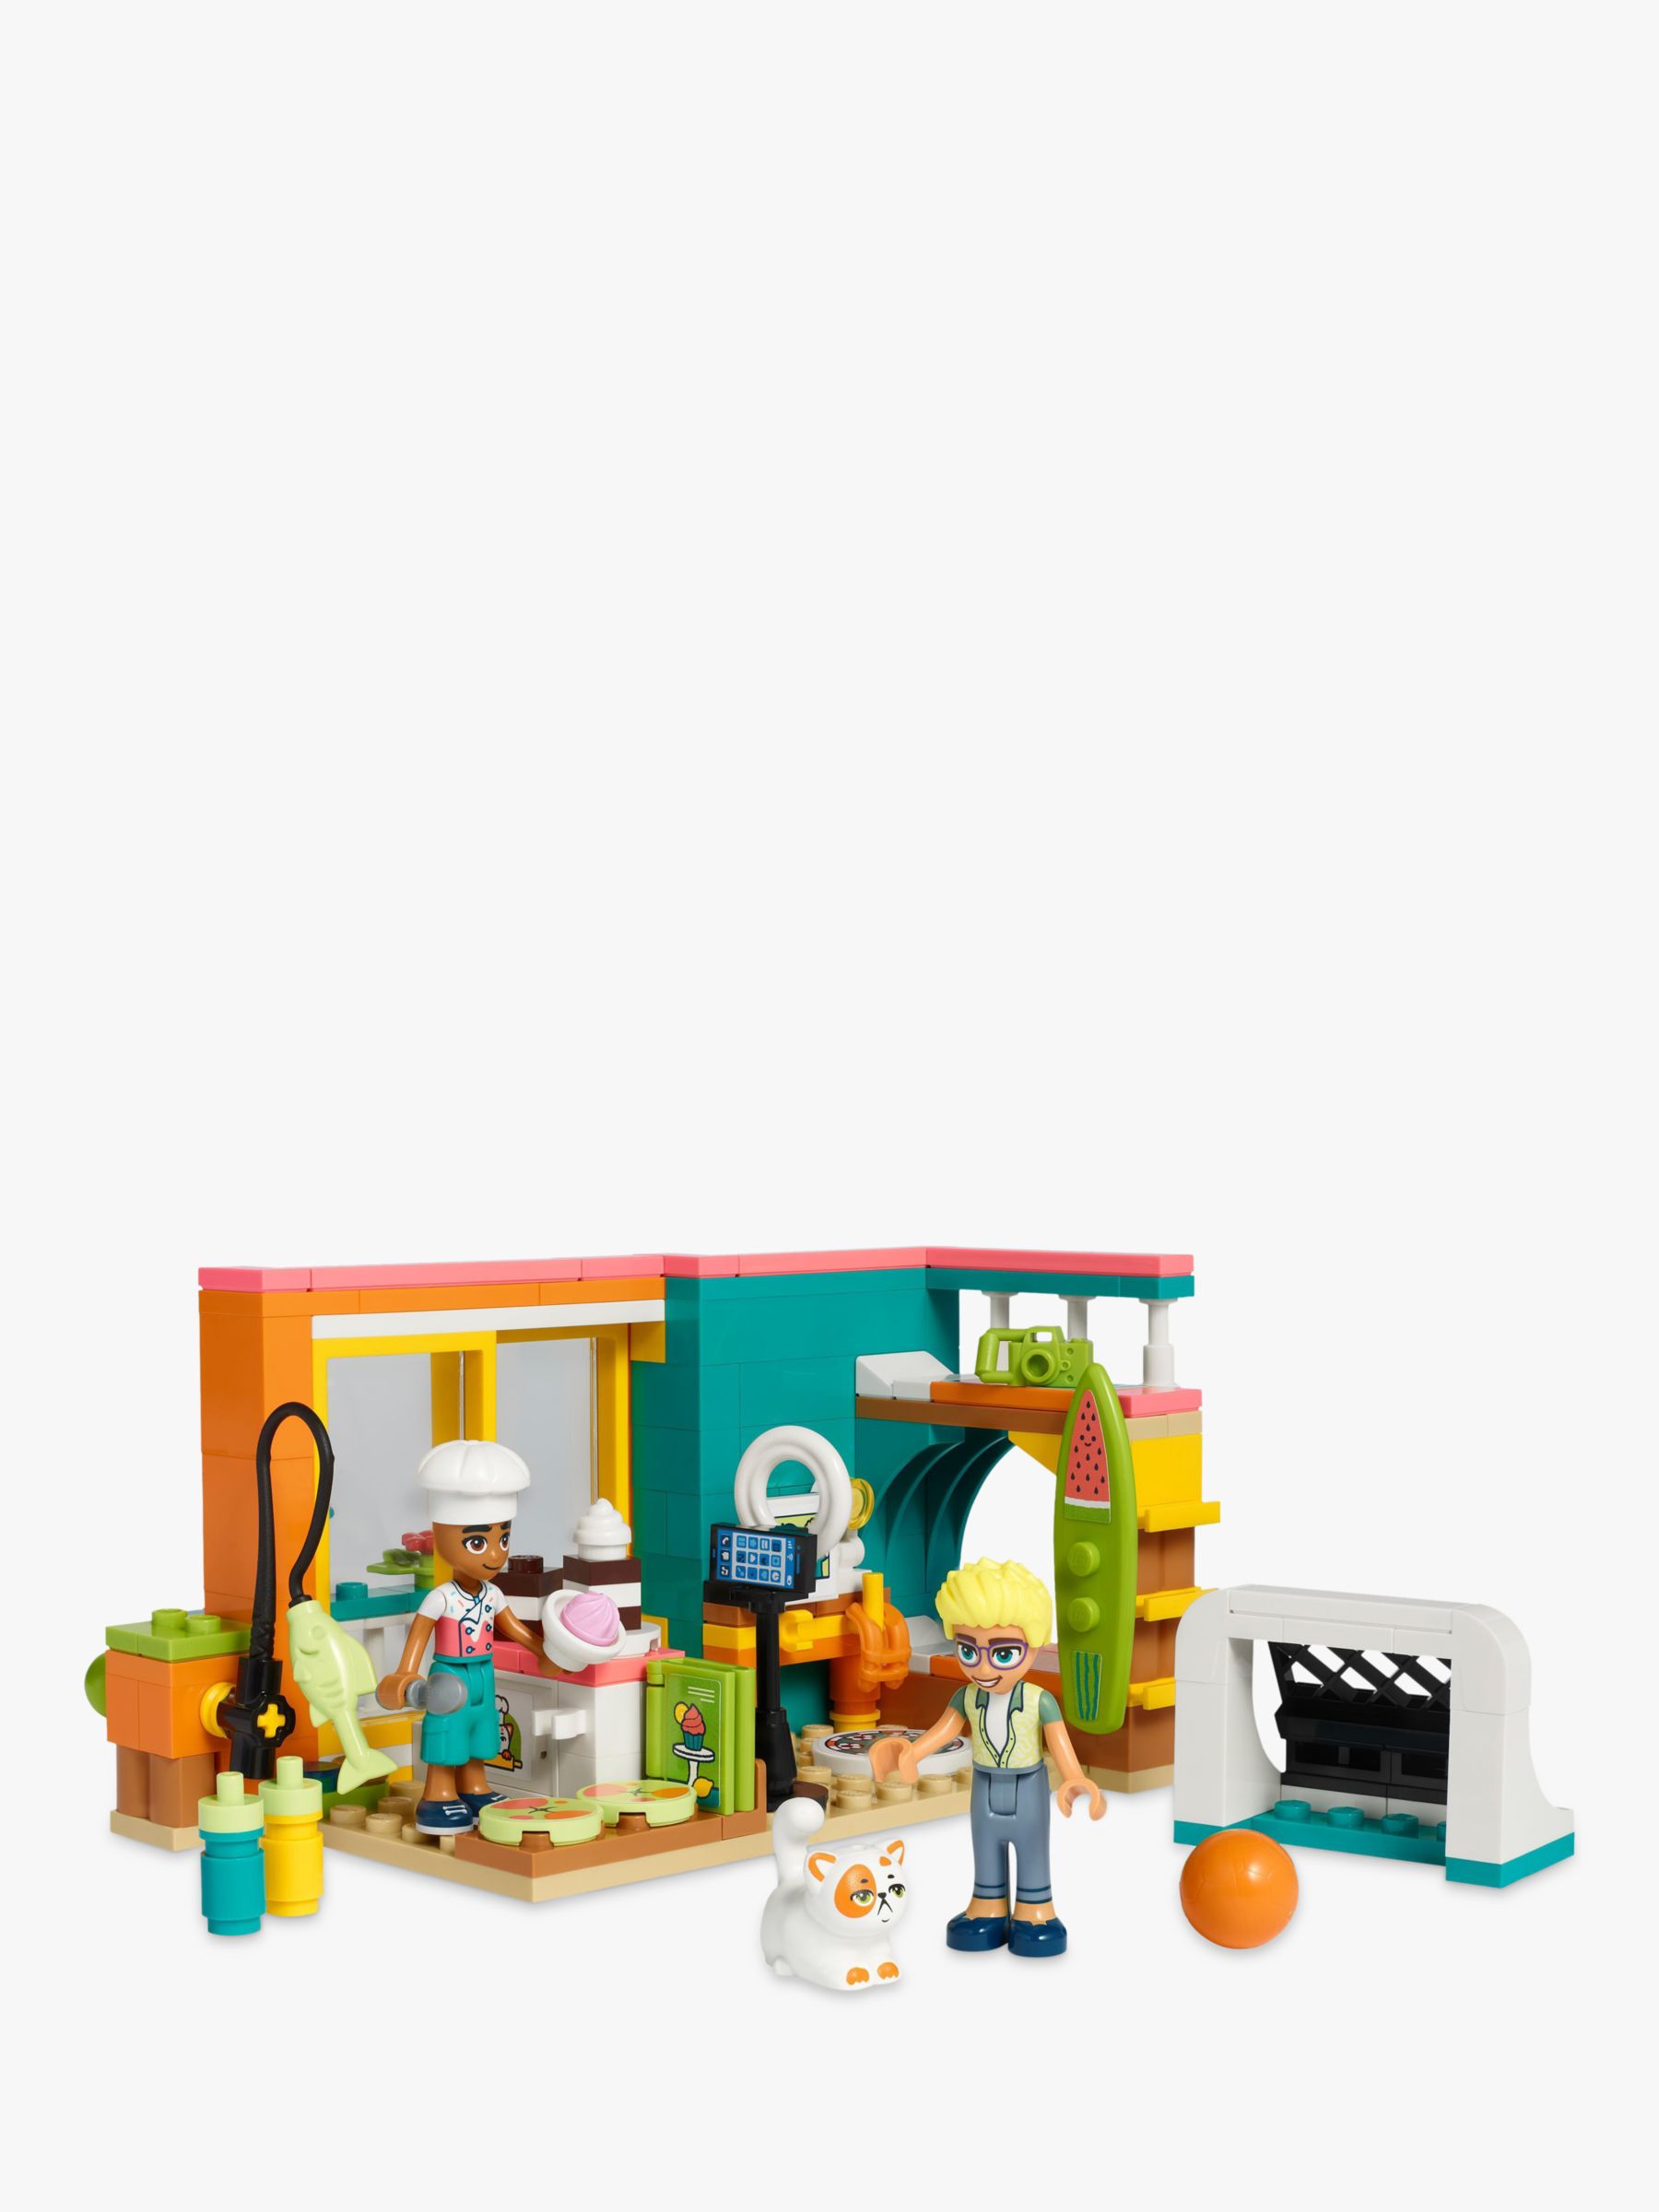 LEGO® Friends Leo's Room 203 Piece Building Kit (41754)